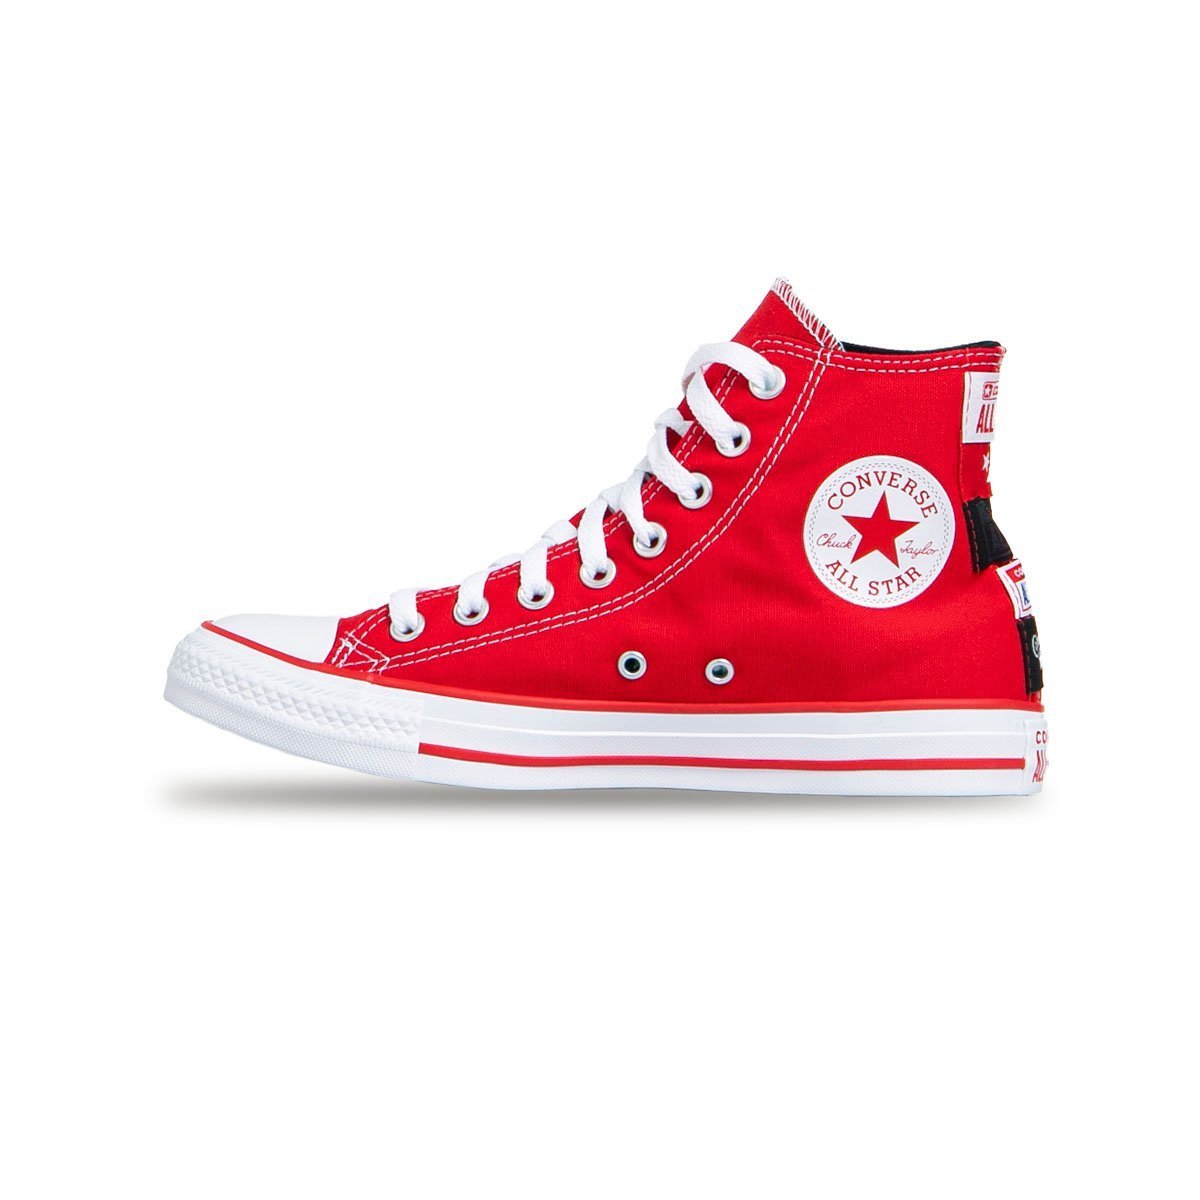 Converse Chuck Taylor All Star -Hi- Red Sucrey | Converse Red Glitter ...